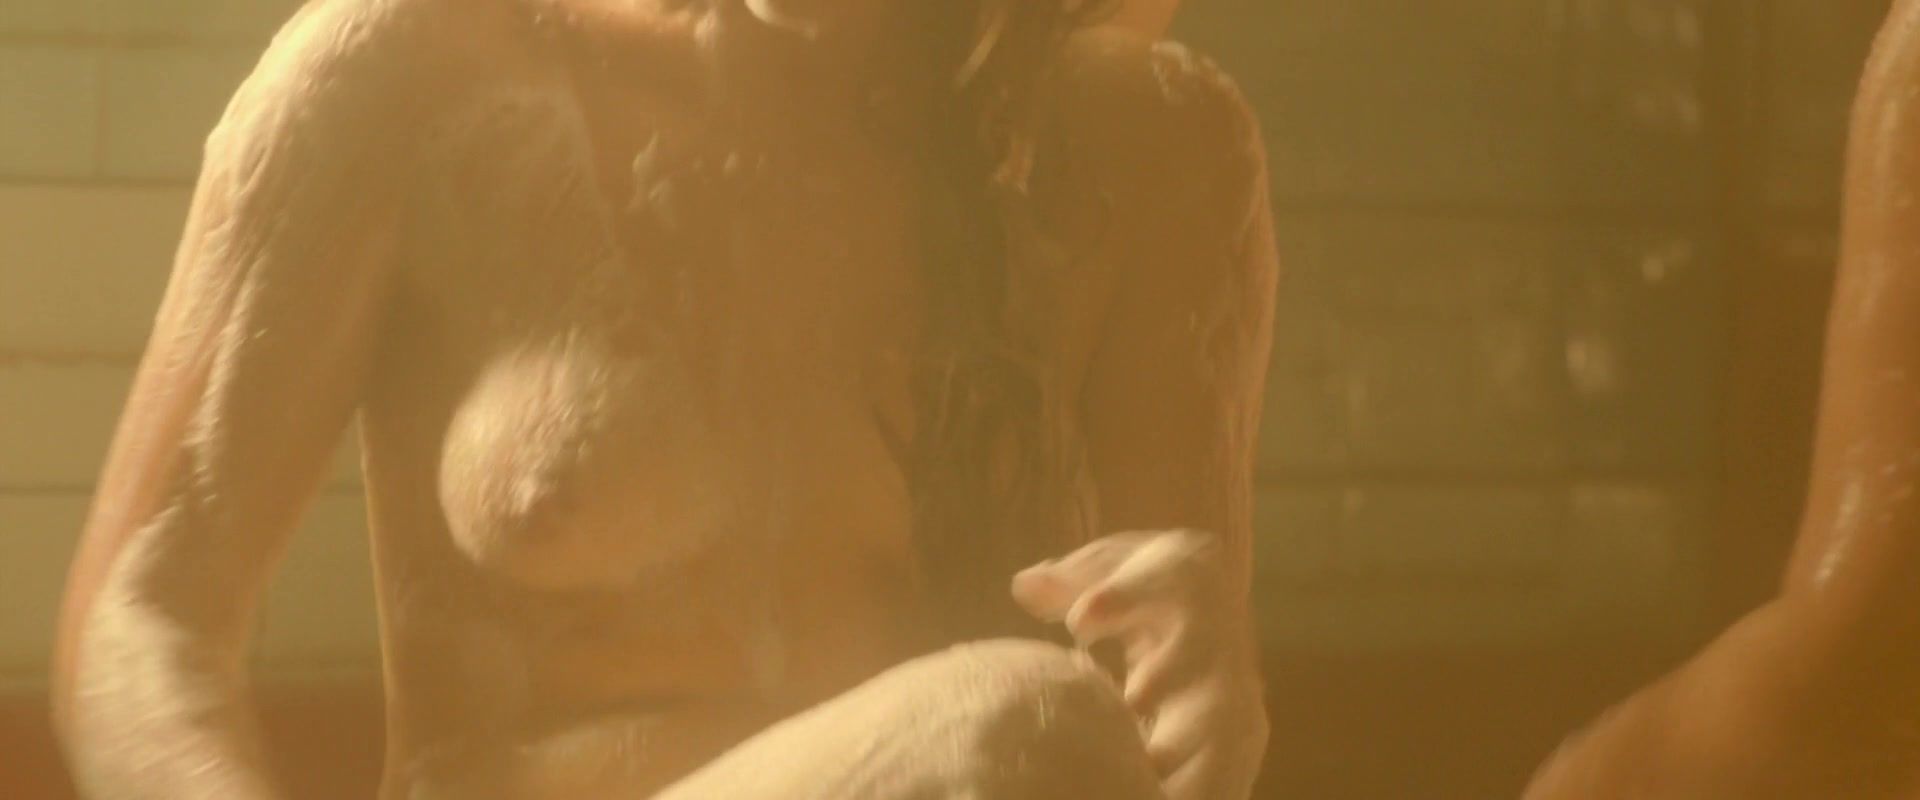 Facial Sex video Darya Melnikova - Odnazhdy (2015) Public Nudity - 2